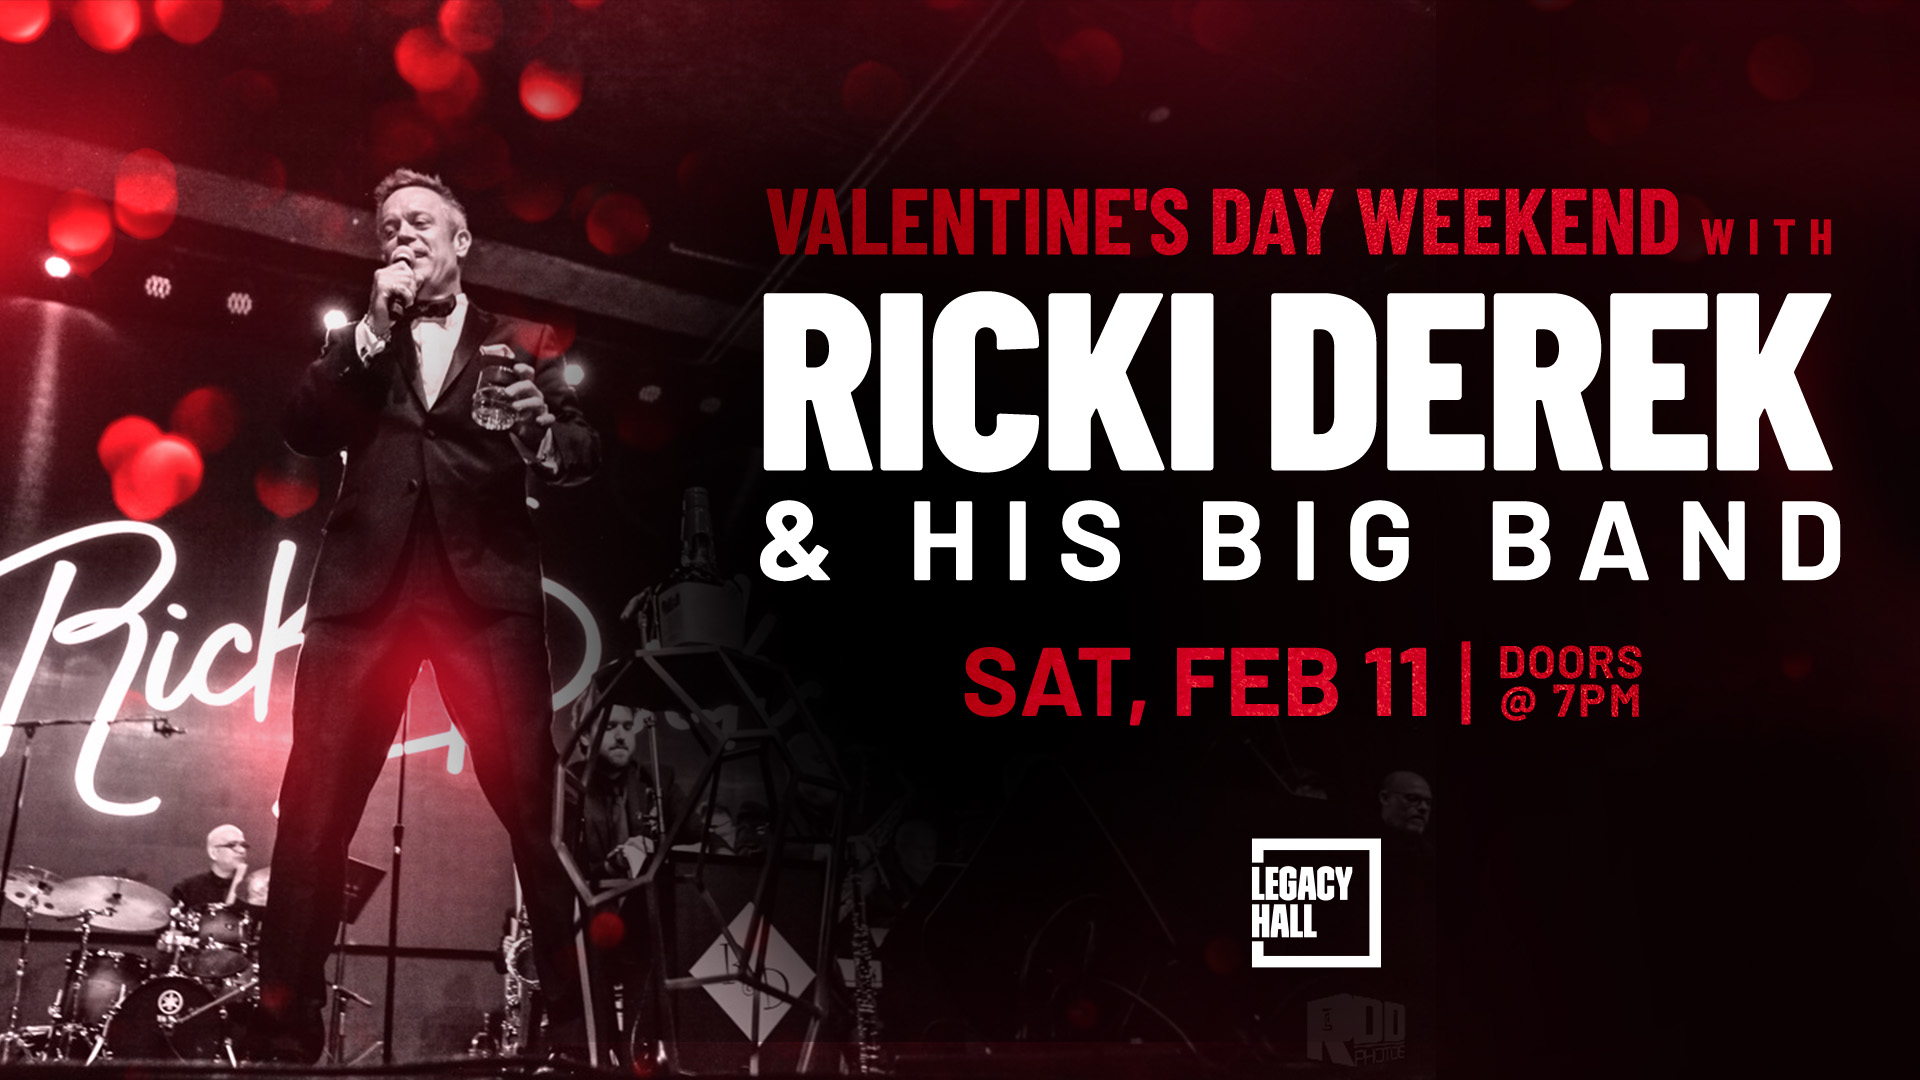 Valentine’s Day Weekend 2022 with Ricki Derek & His Big Band - hero